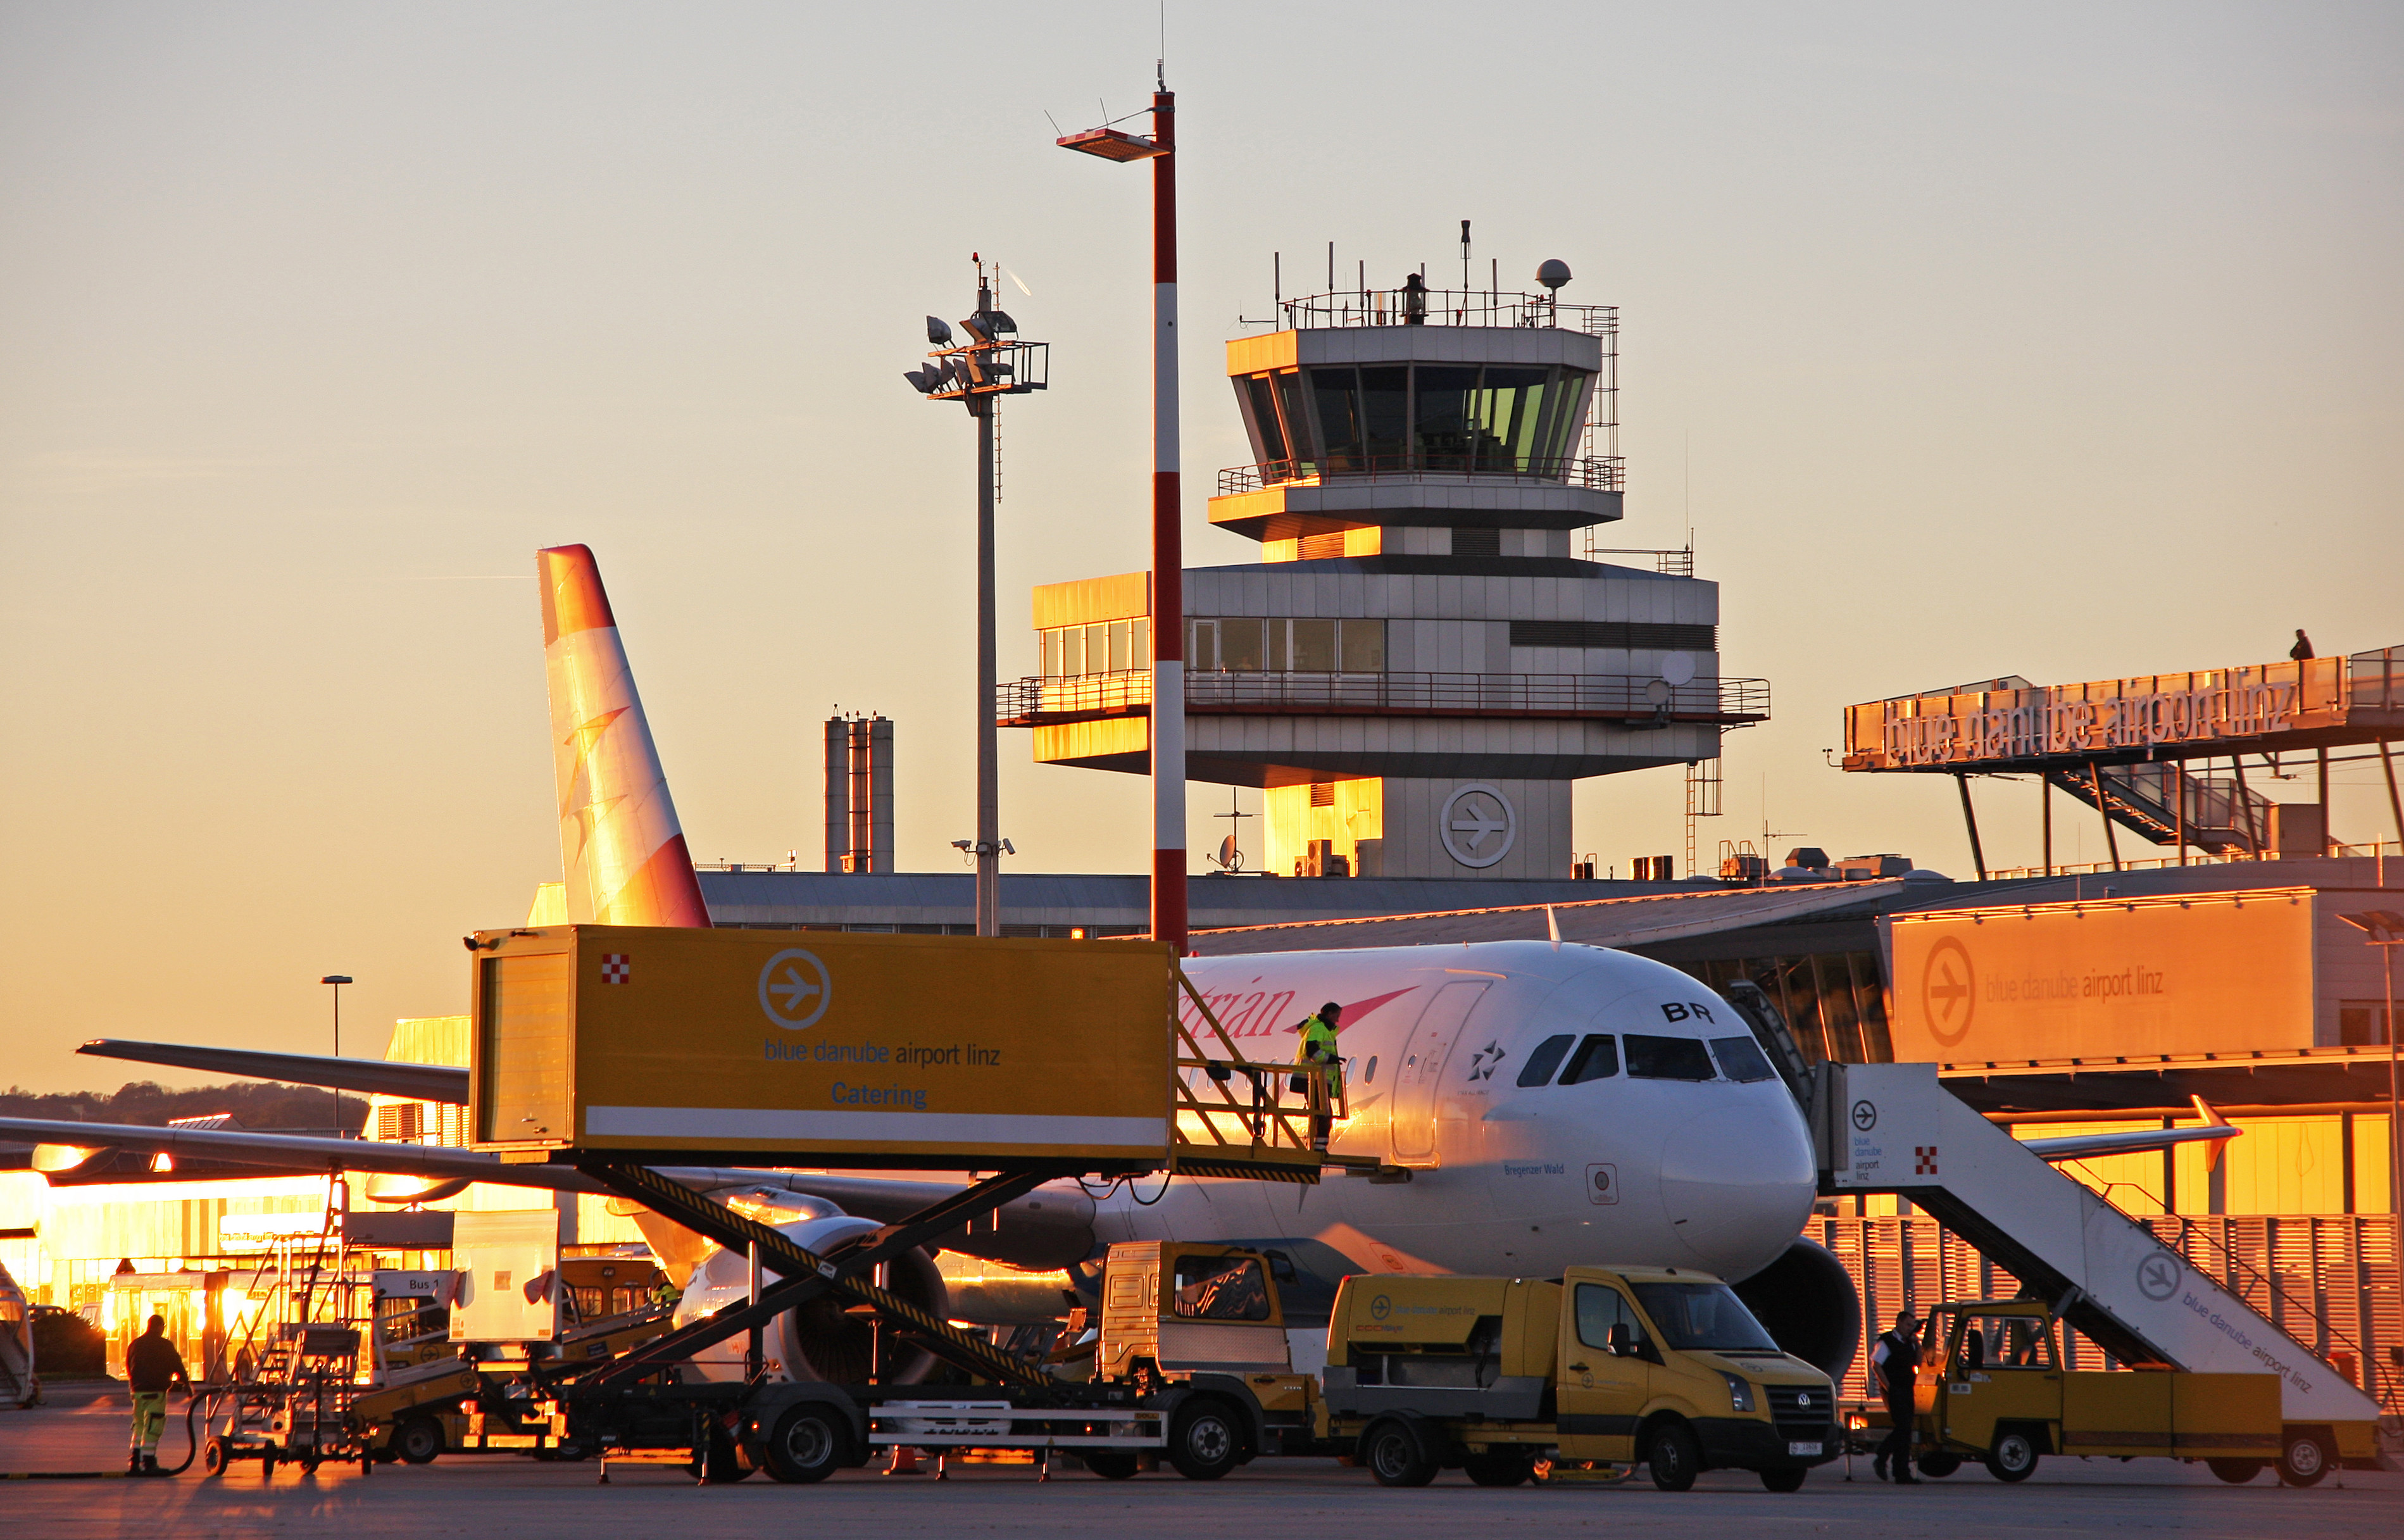 Linz airport to implement Cargospot Handling solution